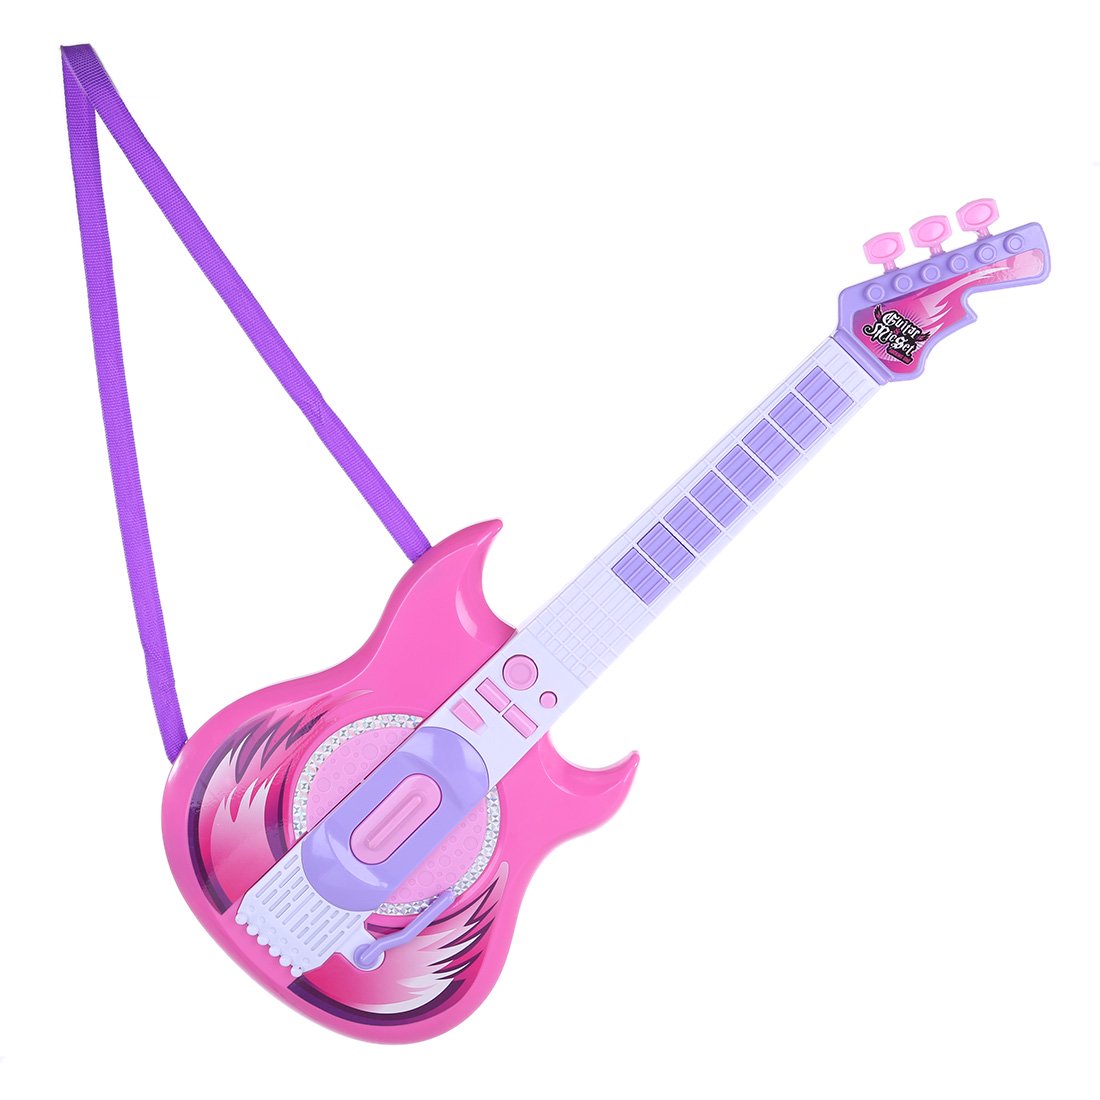 Chitara cu microfon pentru copii ISP „LikeSmart Guitar Rocking Girl”, sunete, microfon, posibilitate conectare telefon prin cablu jack 3.5mm, dezvolta creativitatea